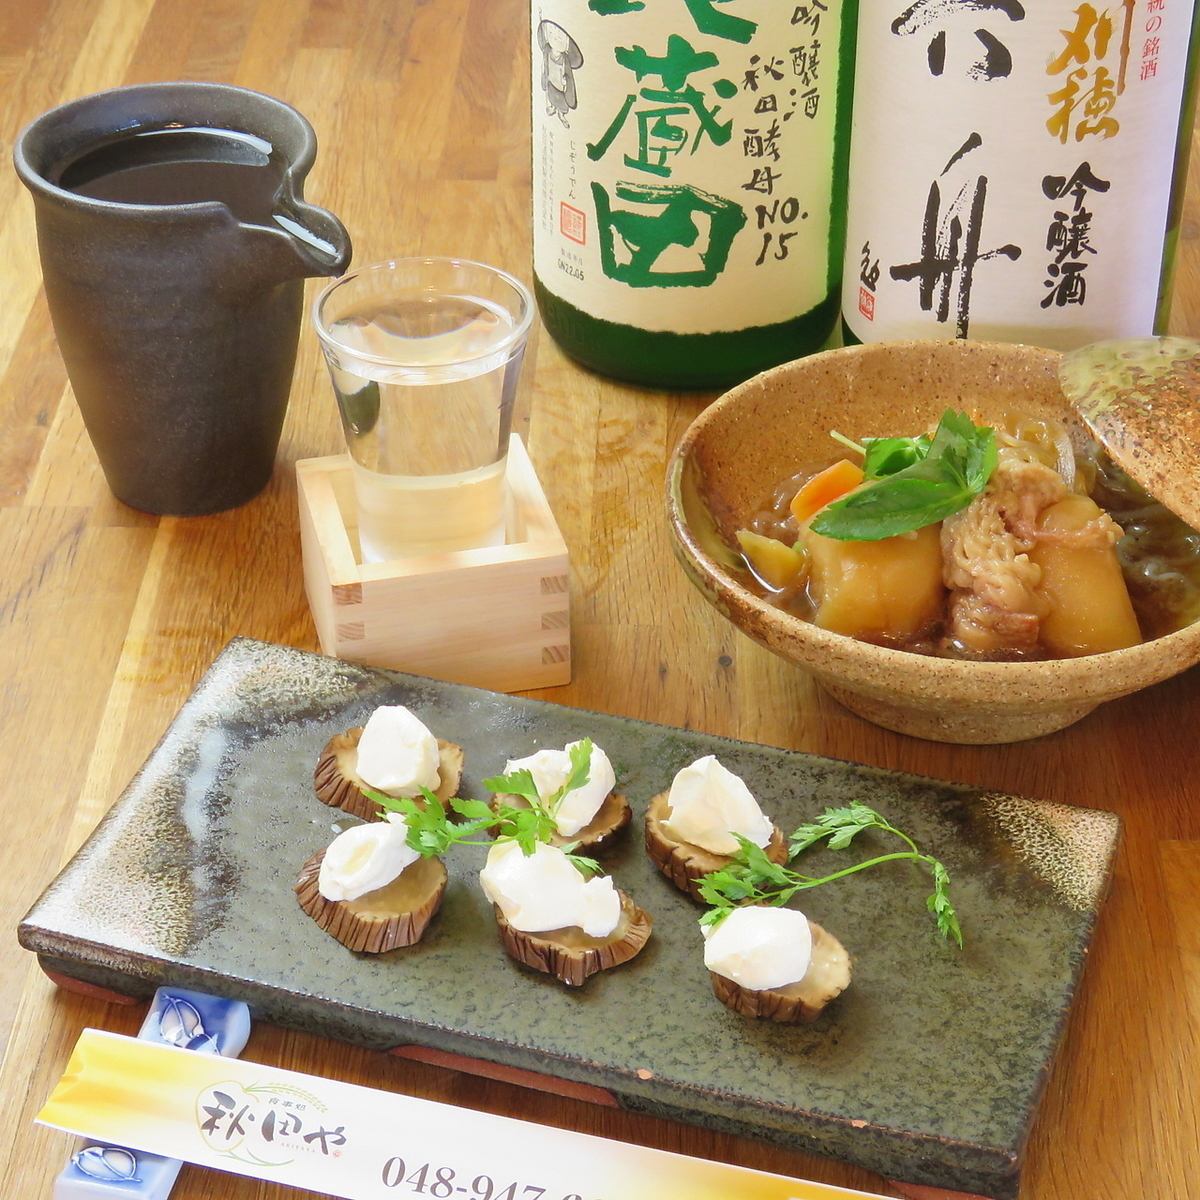 A Japanese izakaya where you can enjoy Akita rice and sake